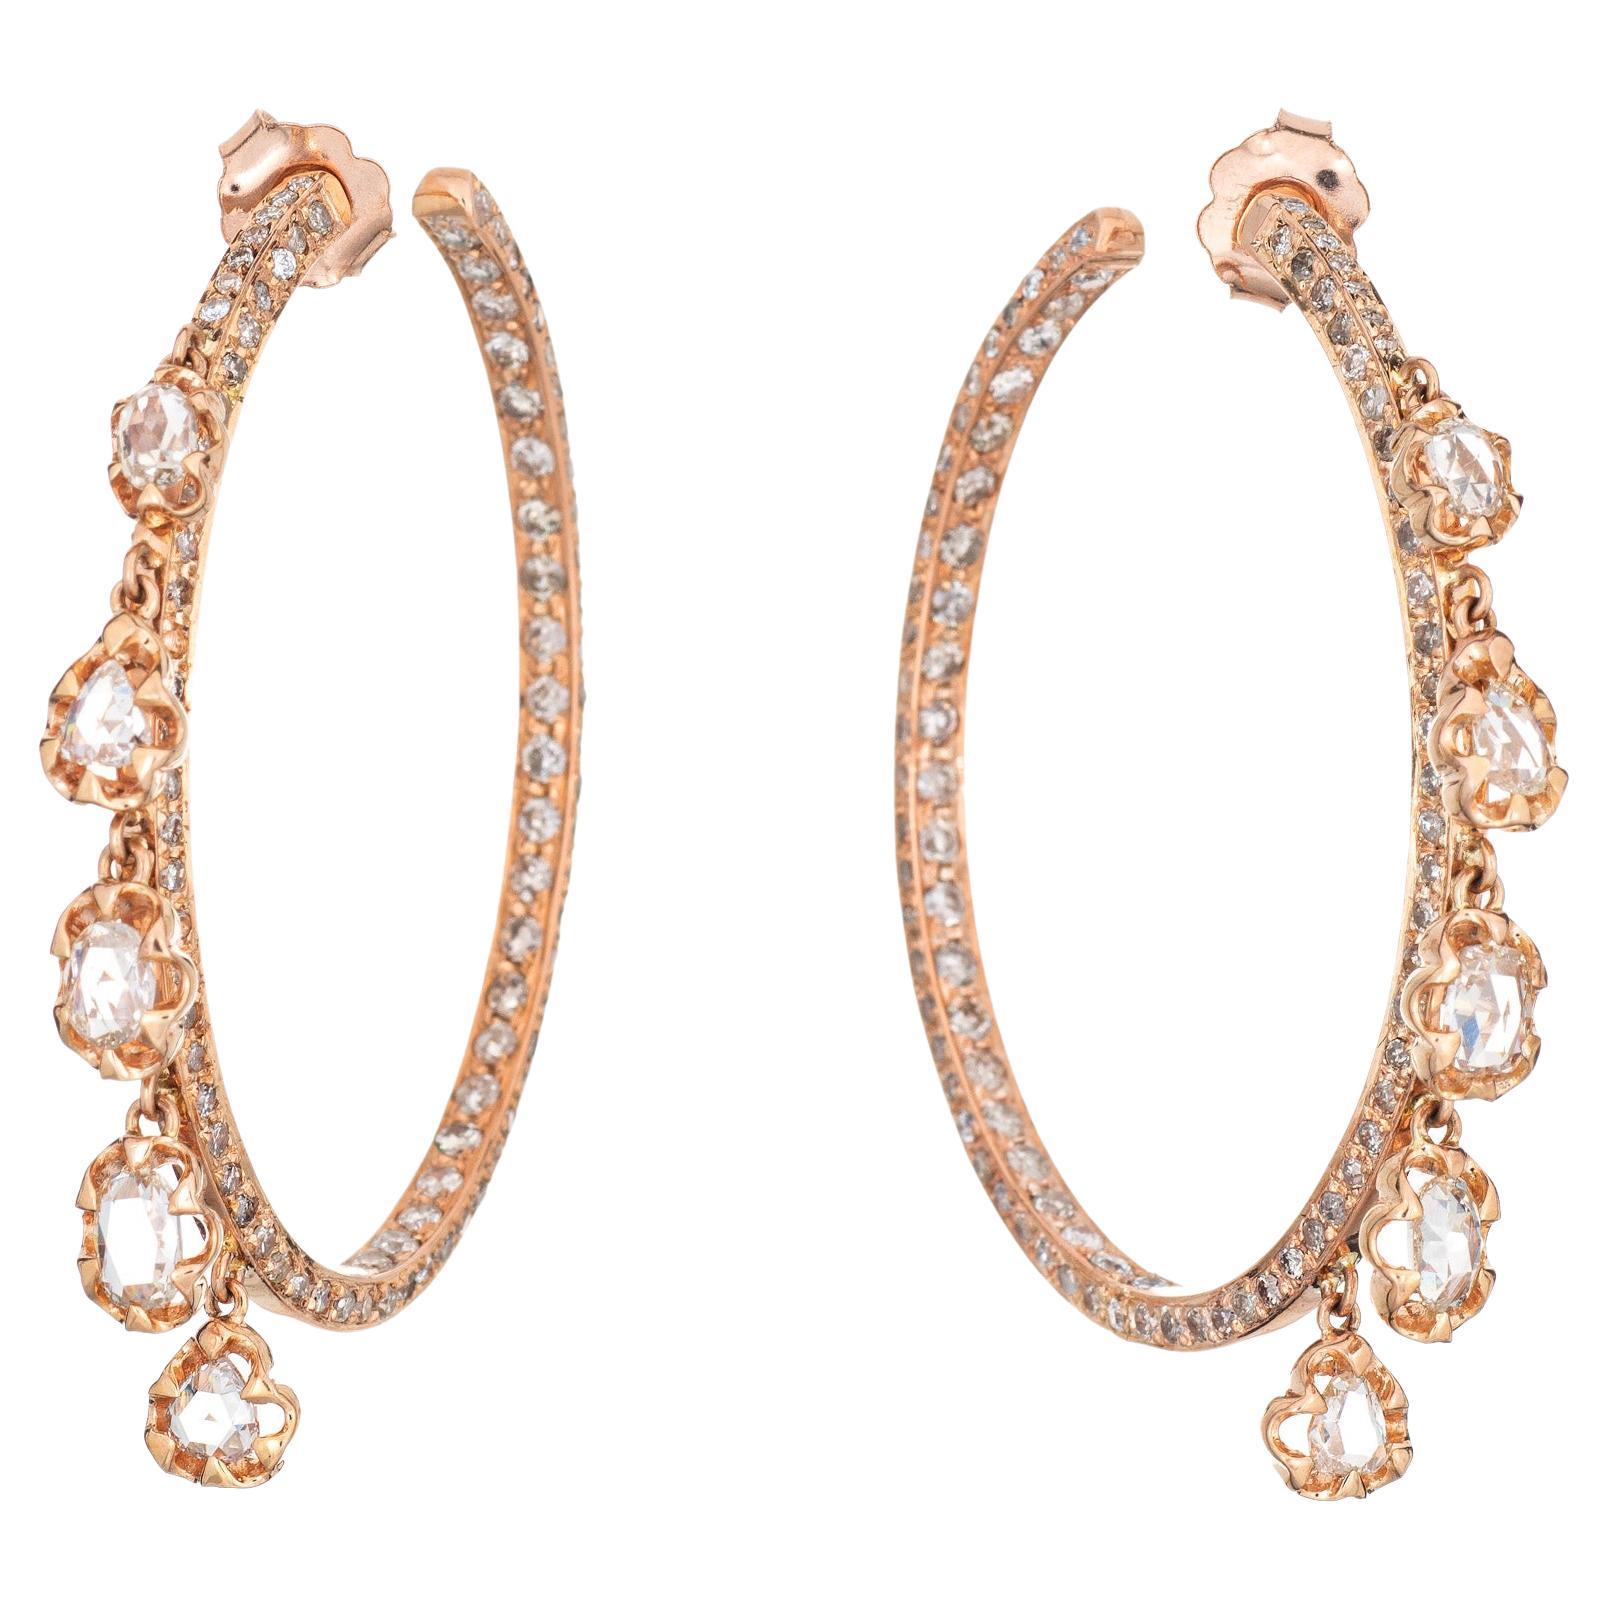 1.50ct Diamond Fringe Hoop Earrings Estate 18k Rose Gold Inside Out Jewelry For Sale